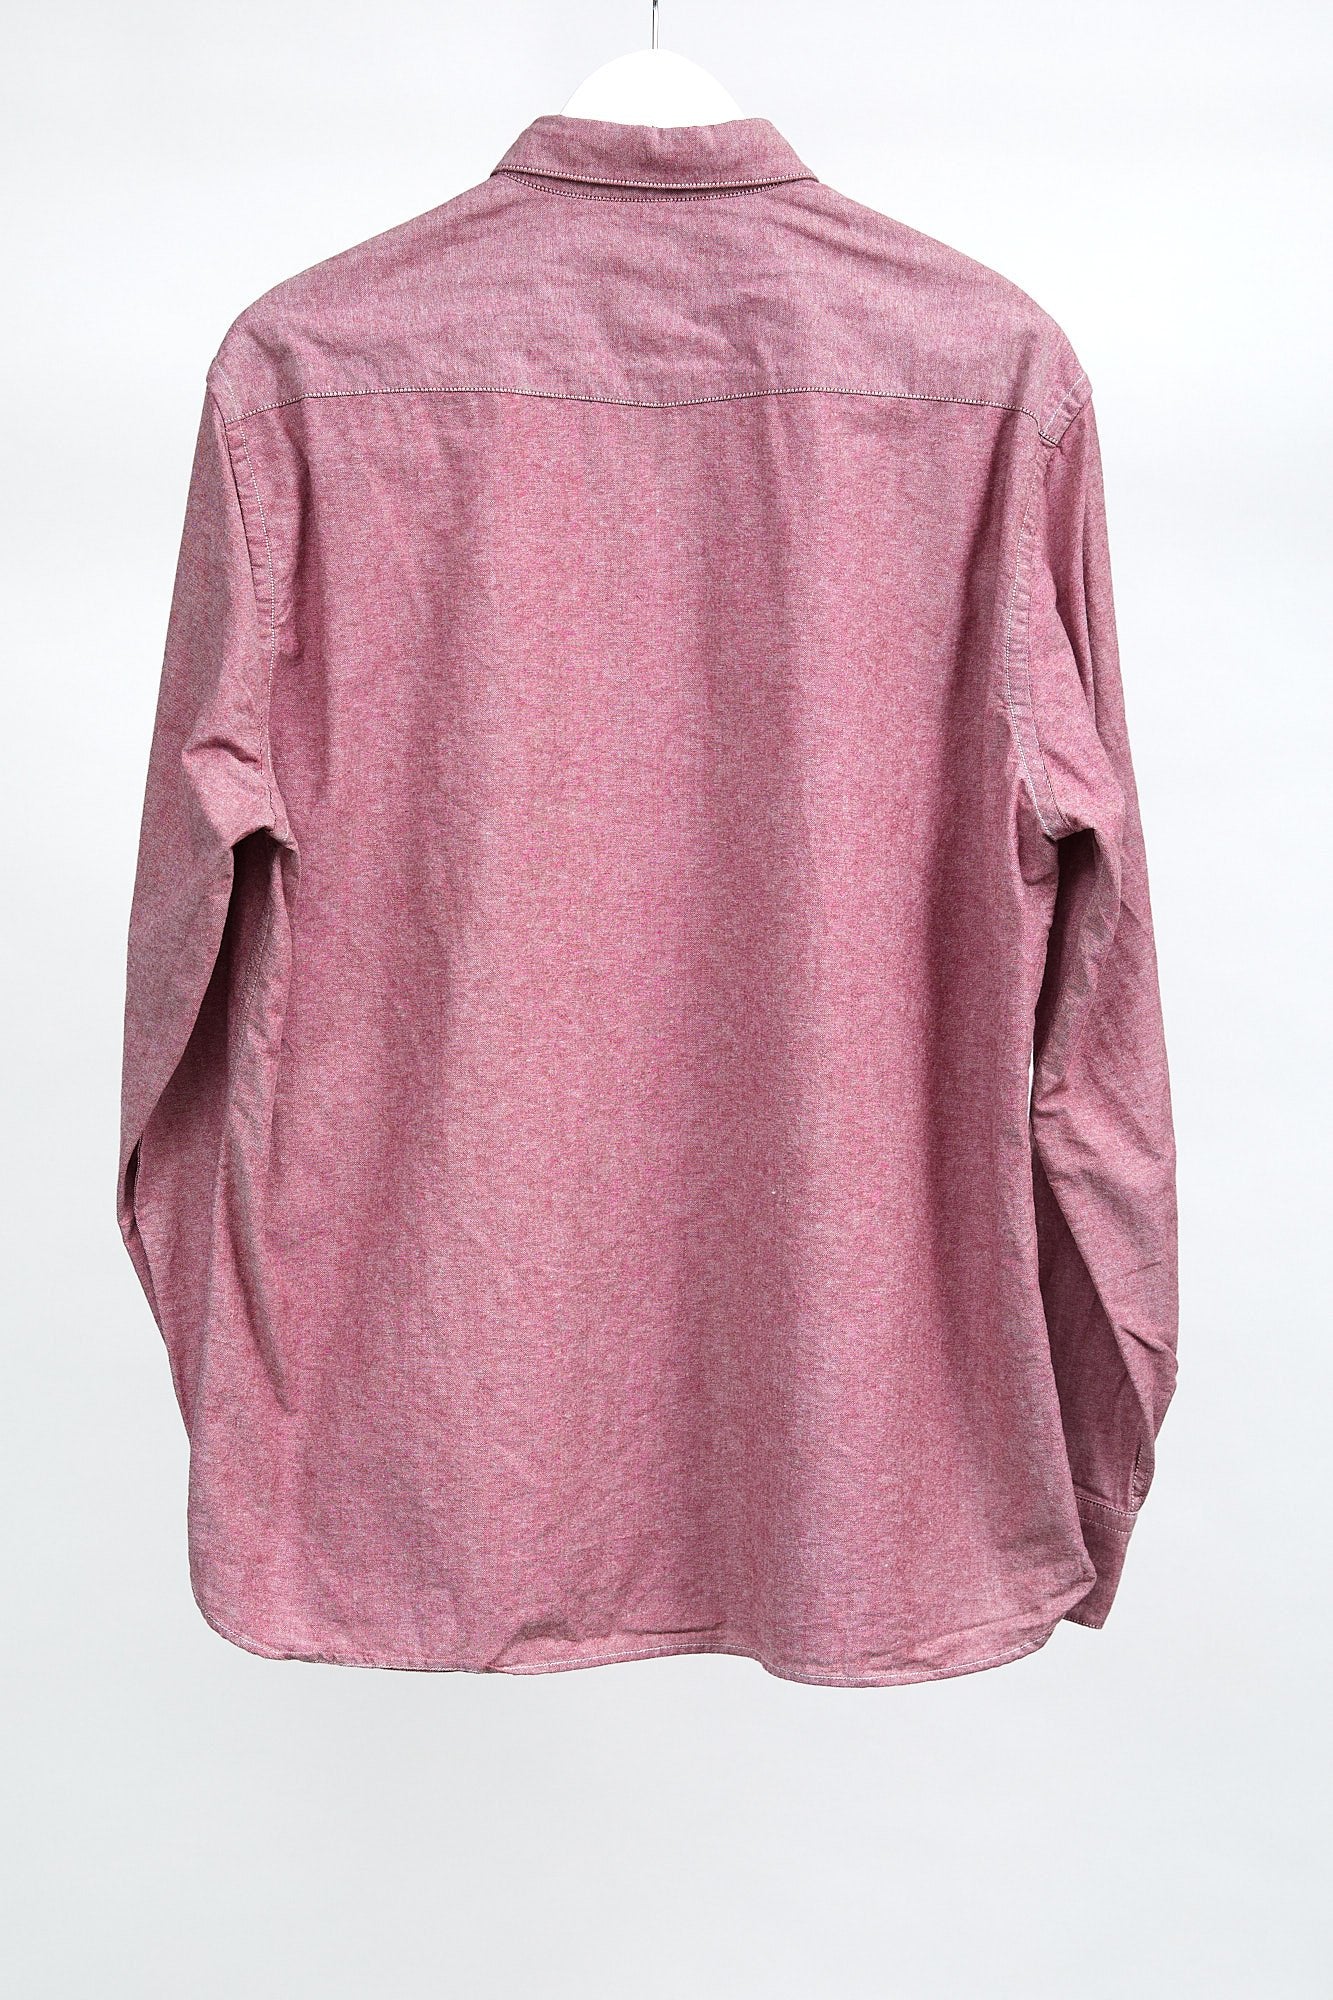 Mens Mango Pink Shirt: Size Large